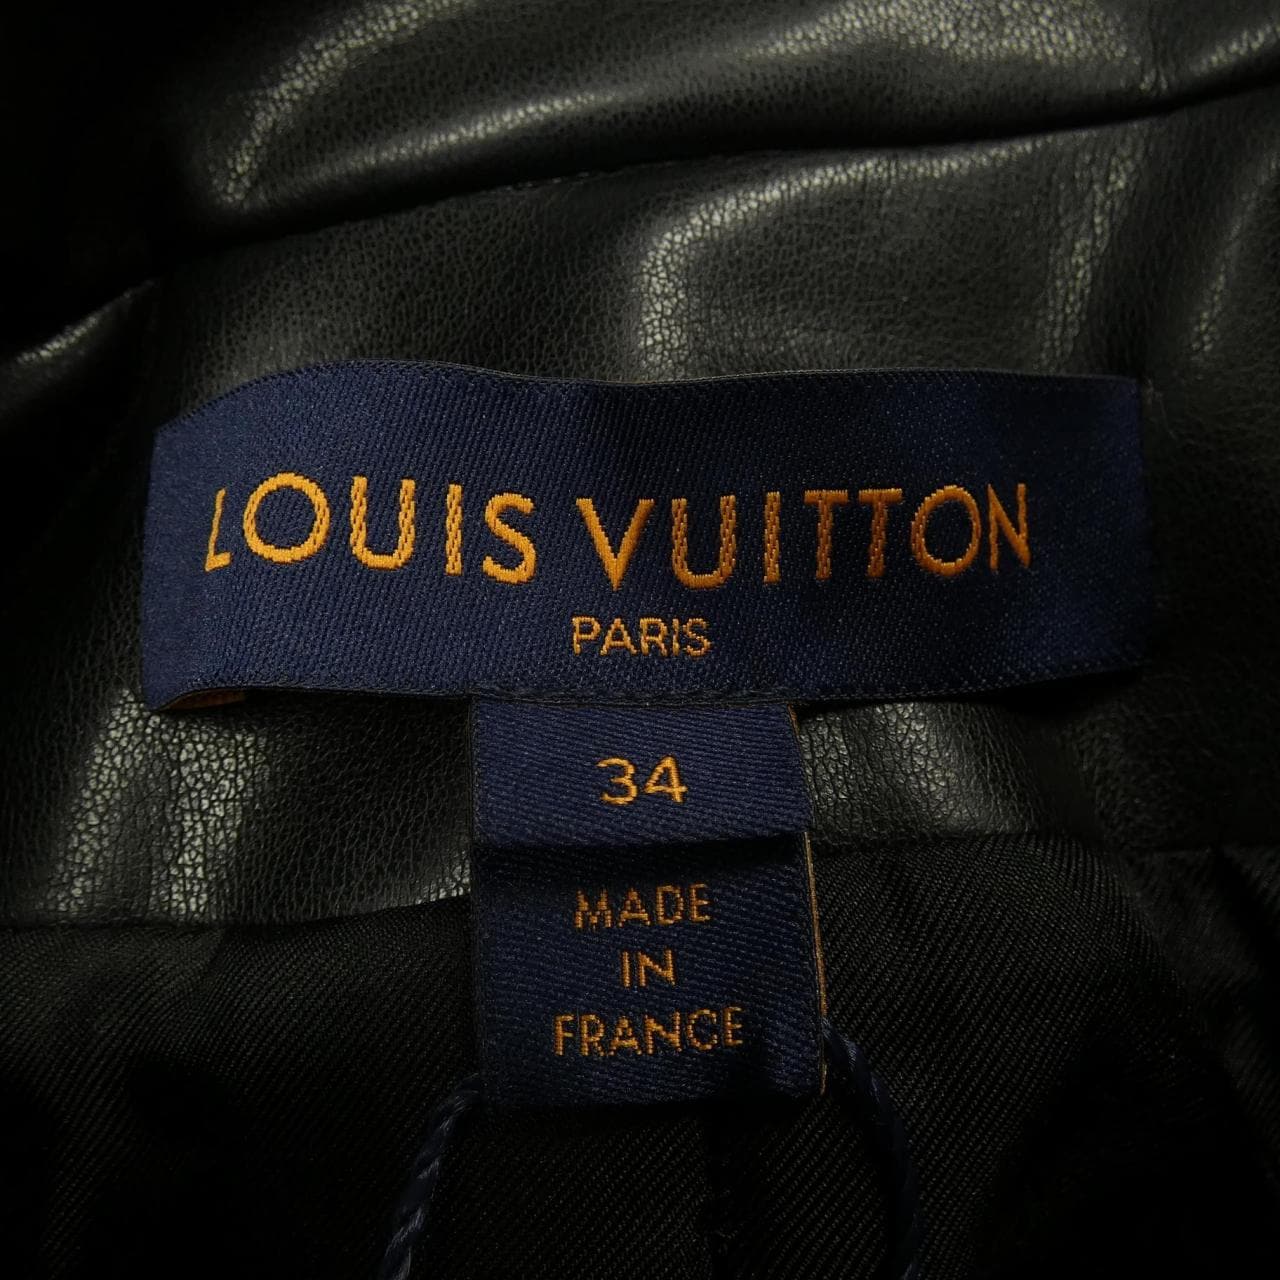 LOUIS VUITTON VUITTON jacket